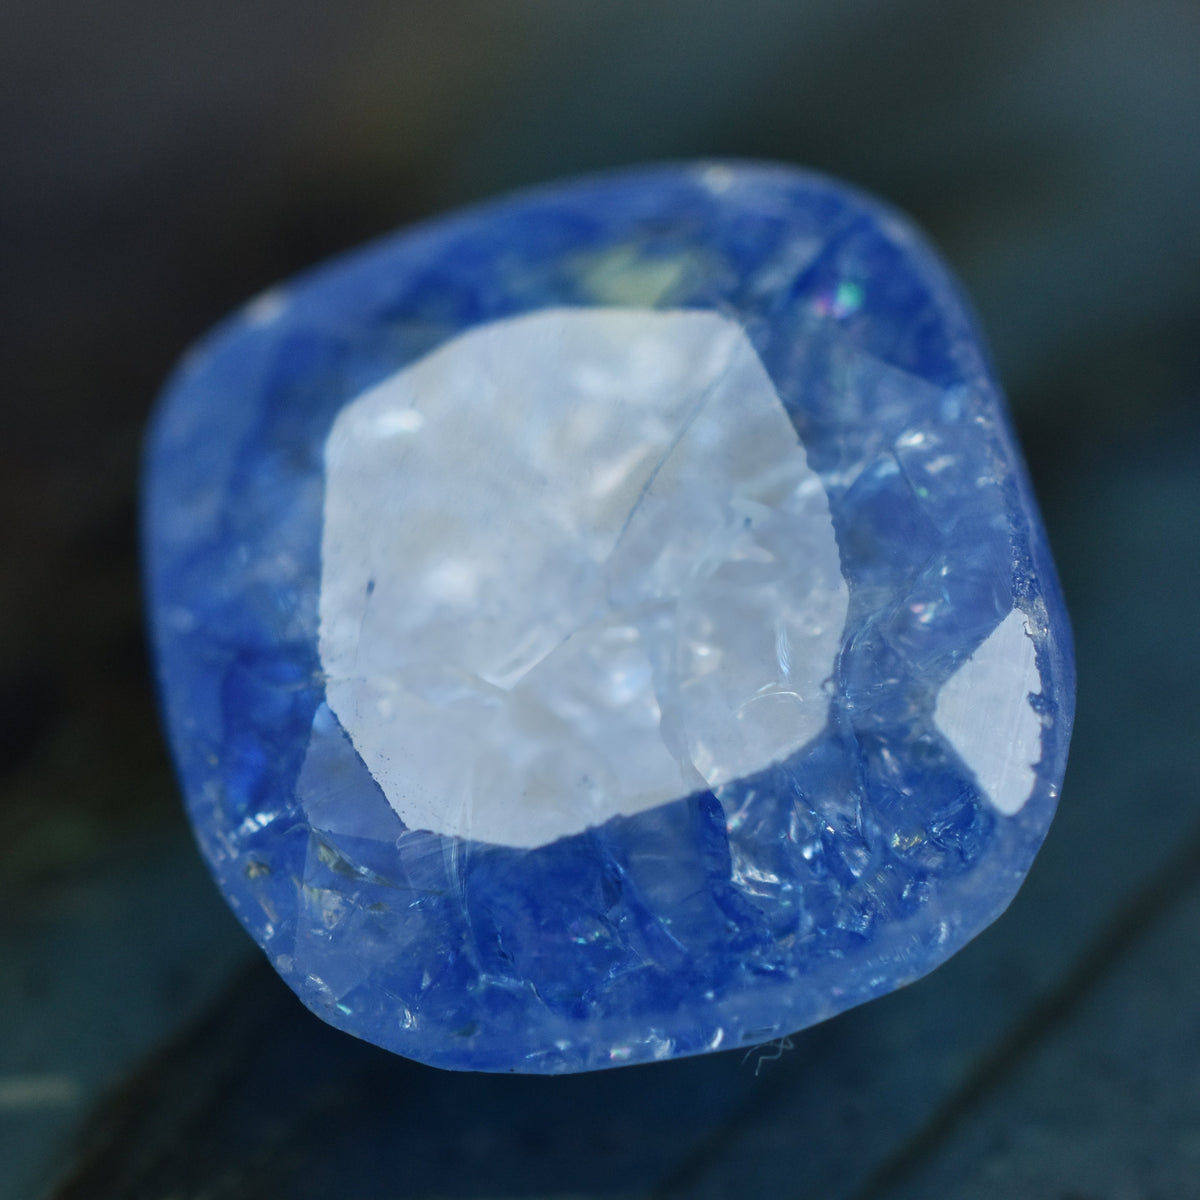 Square Cushion Cut 8.45 Carat Blue Sapphire Certified Natural Loose Gemstone Jewelry Making Gemstone